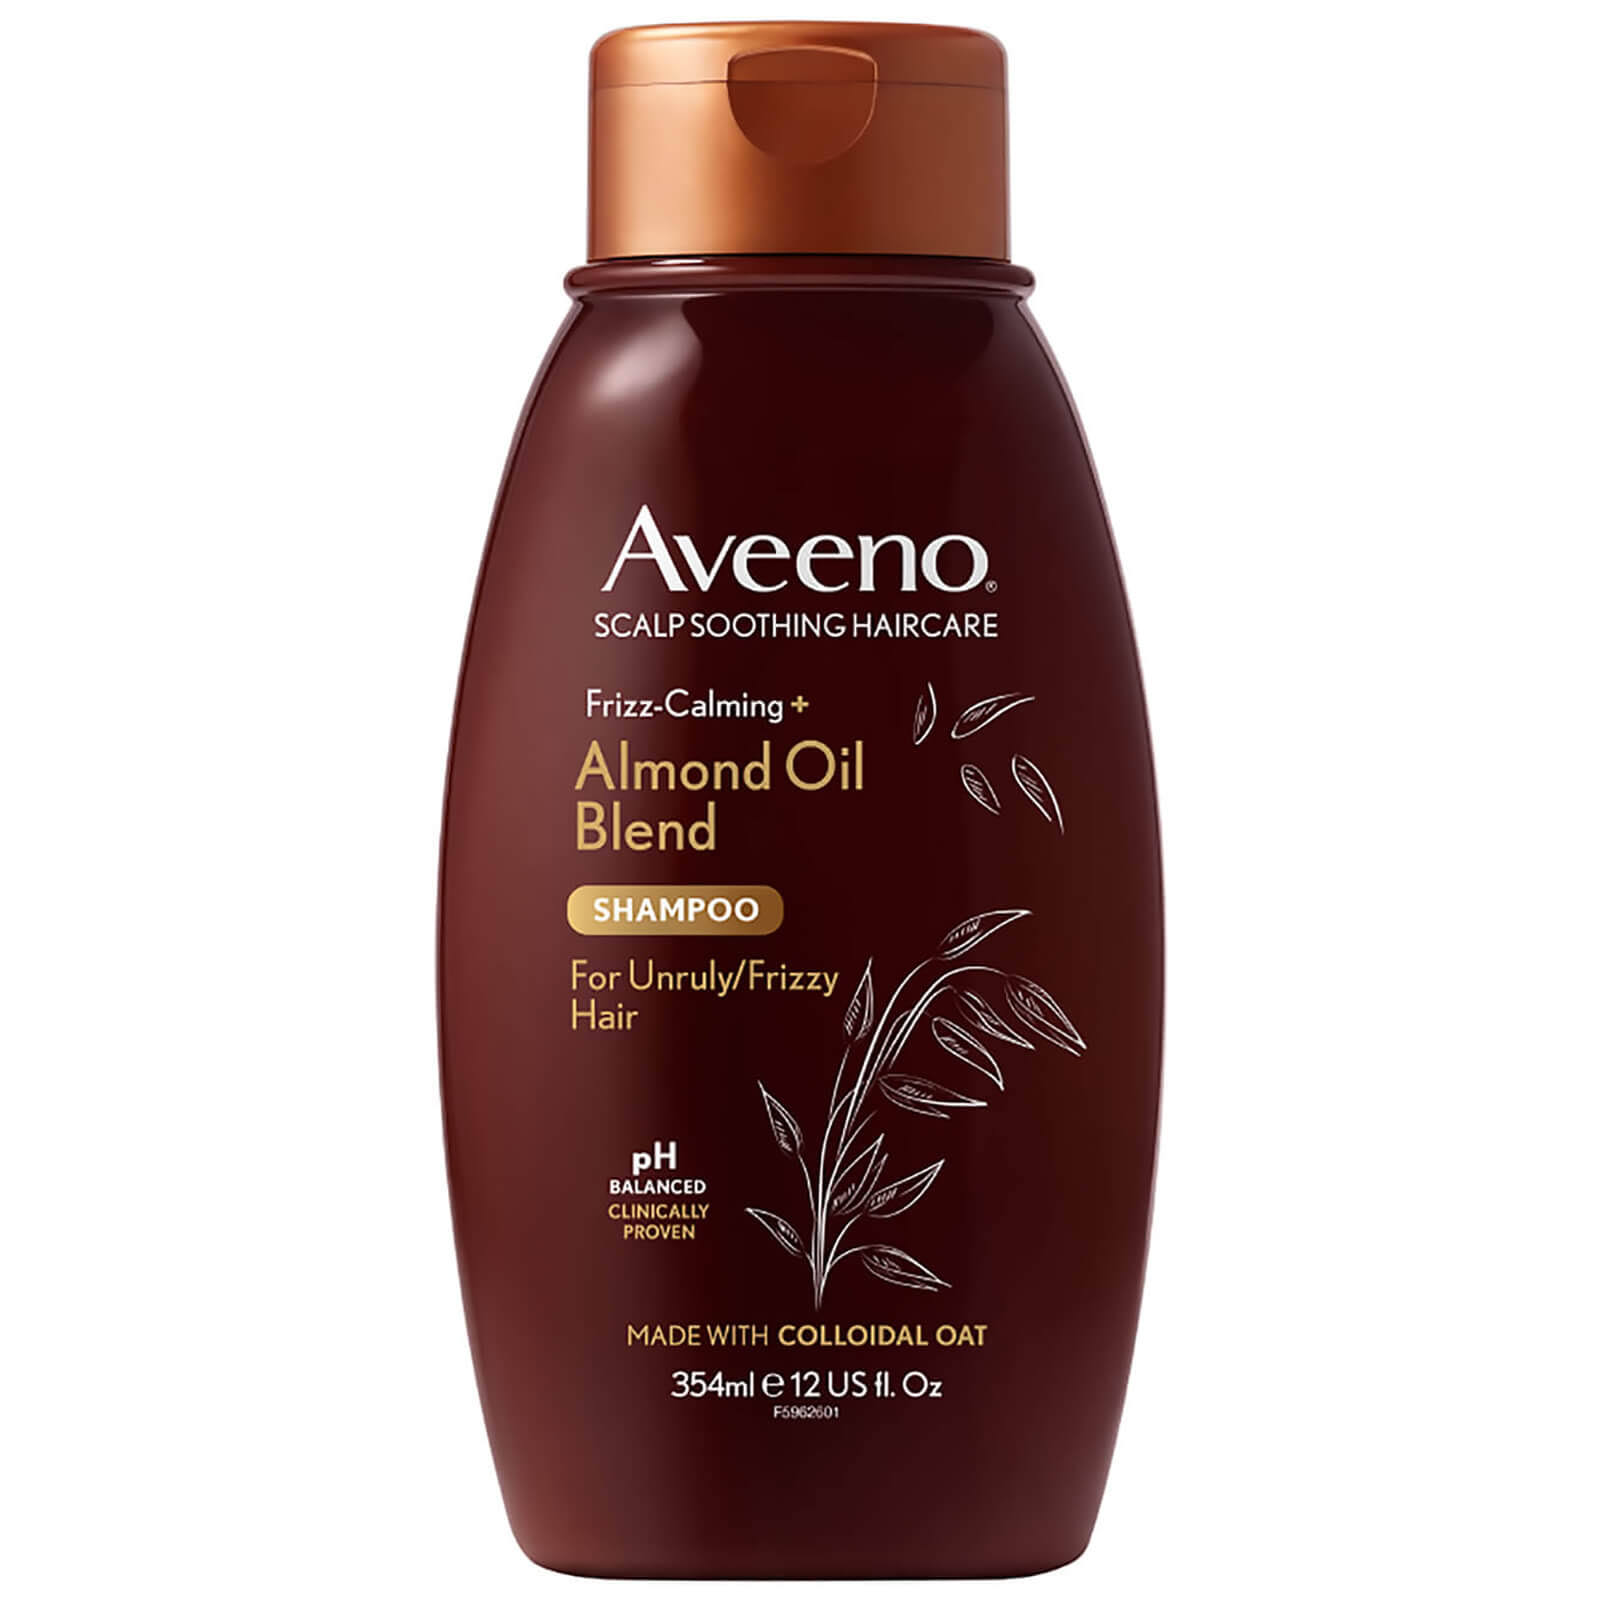 Aveeno Frizz-Calming Almond Oil Blend Shampoo 354ml